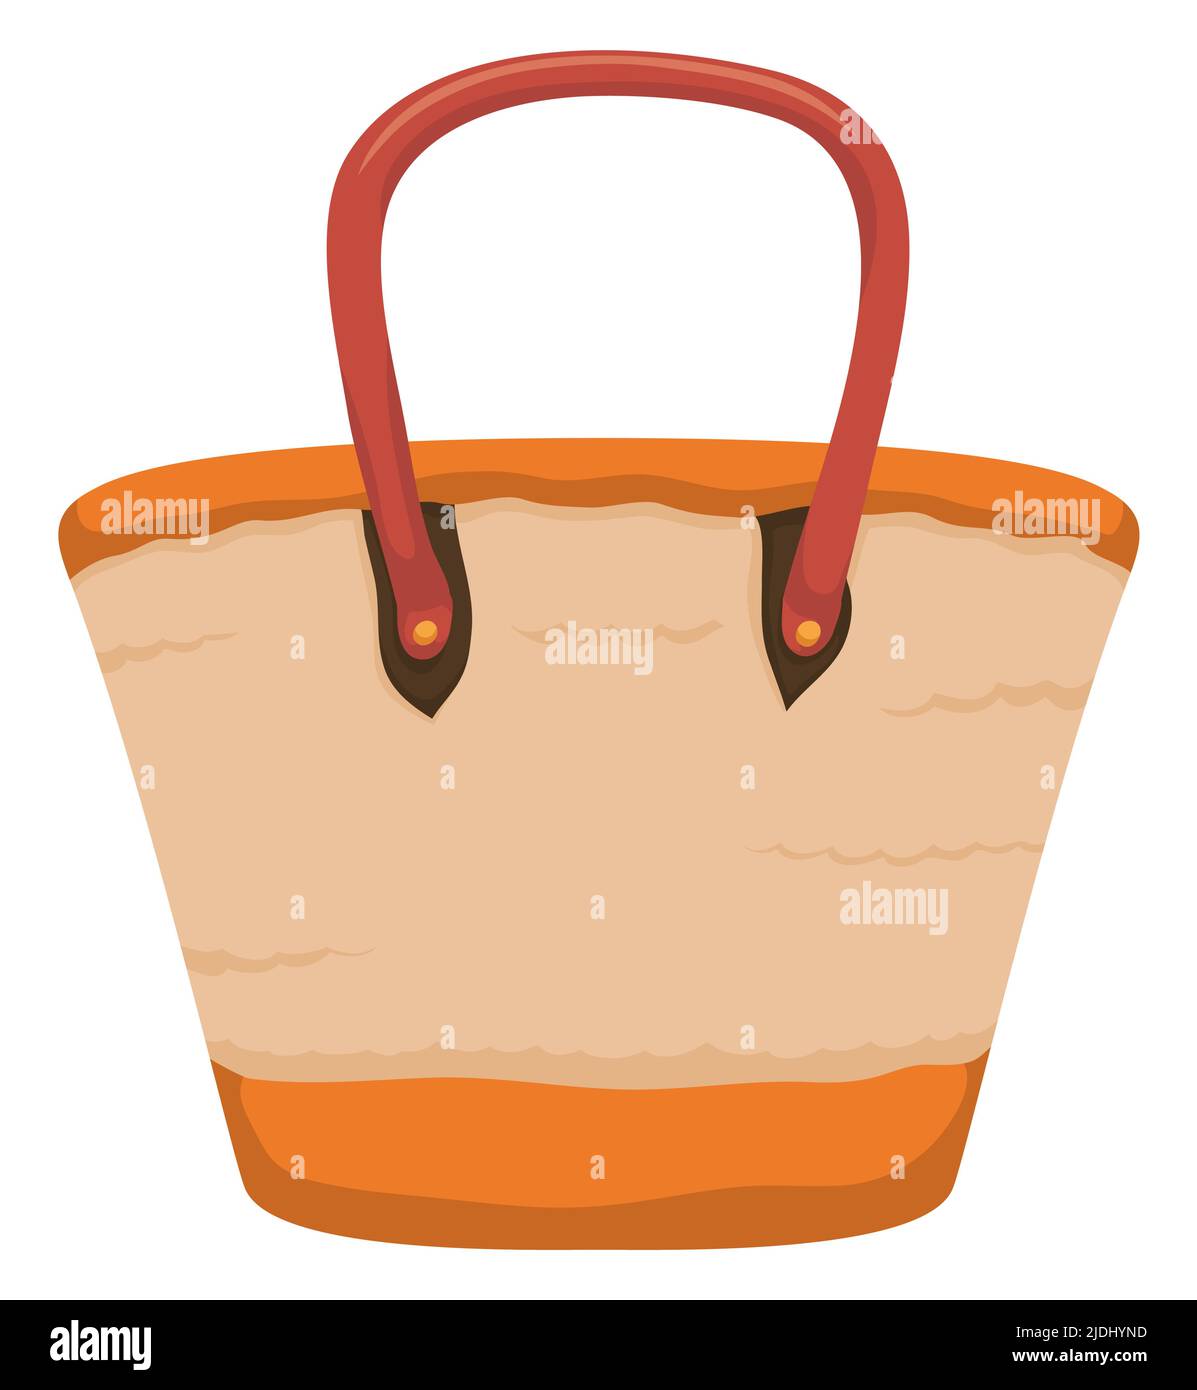 Isolated fancy handbag ready for summertime at the beach in cartoon ...